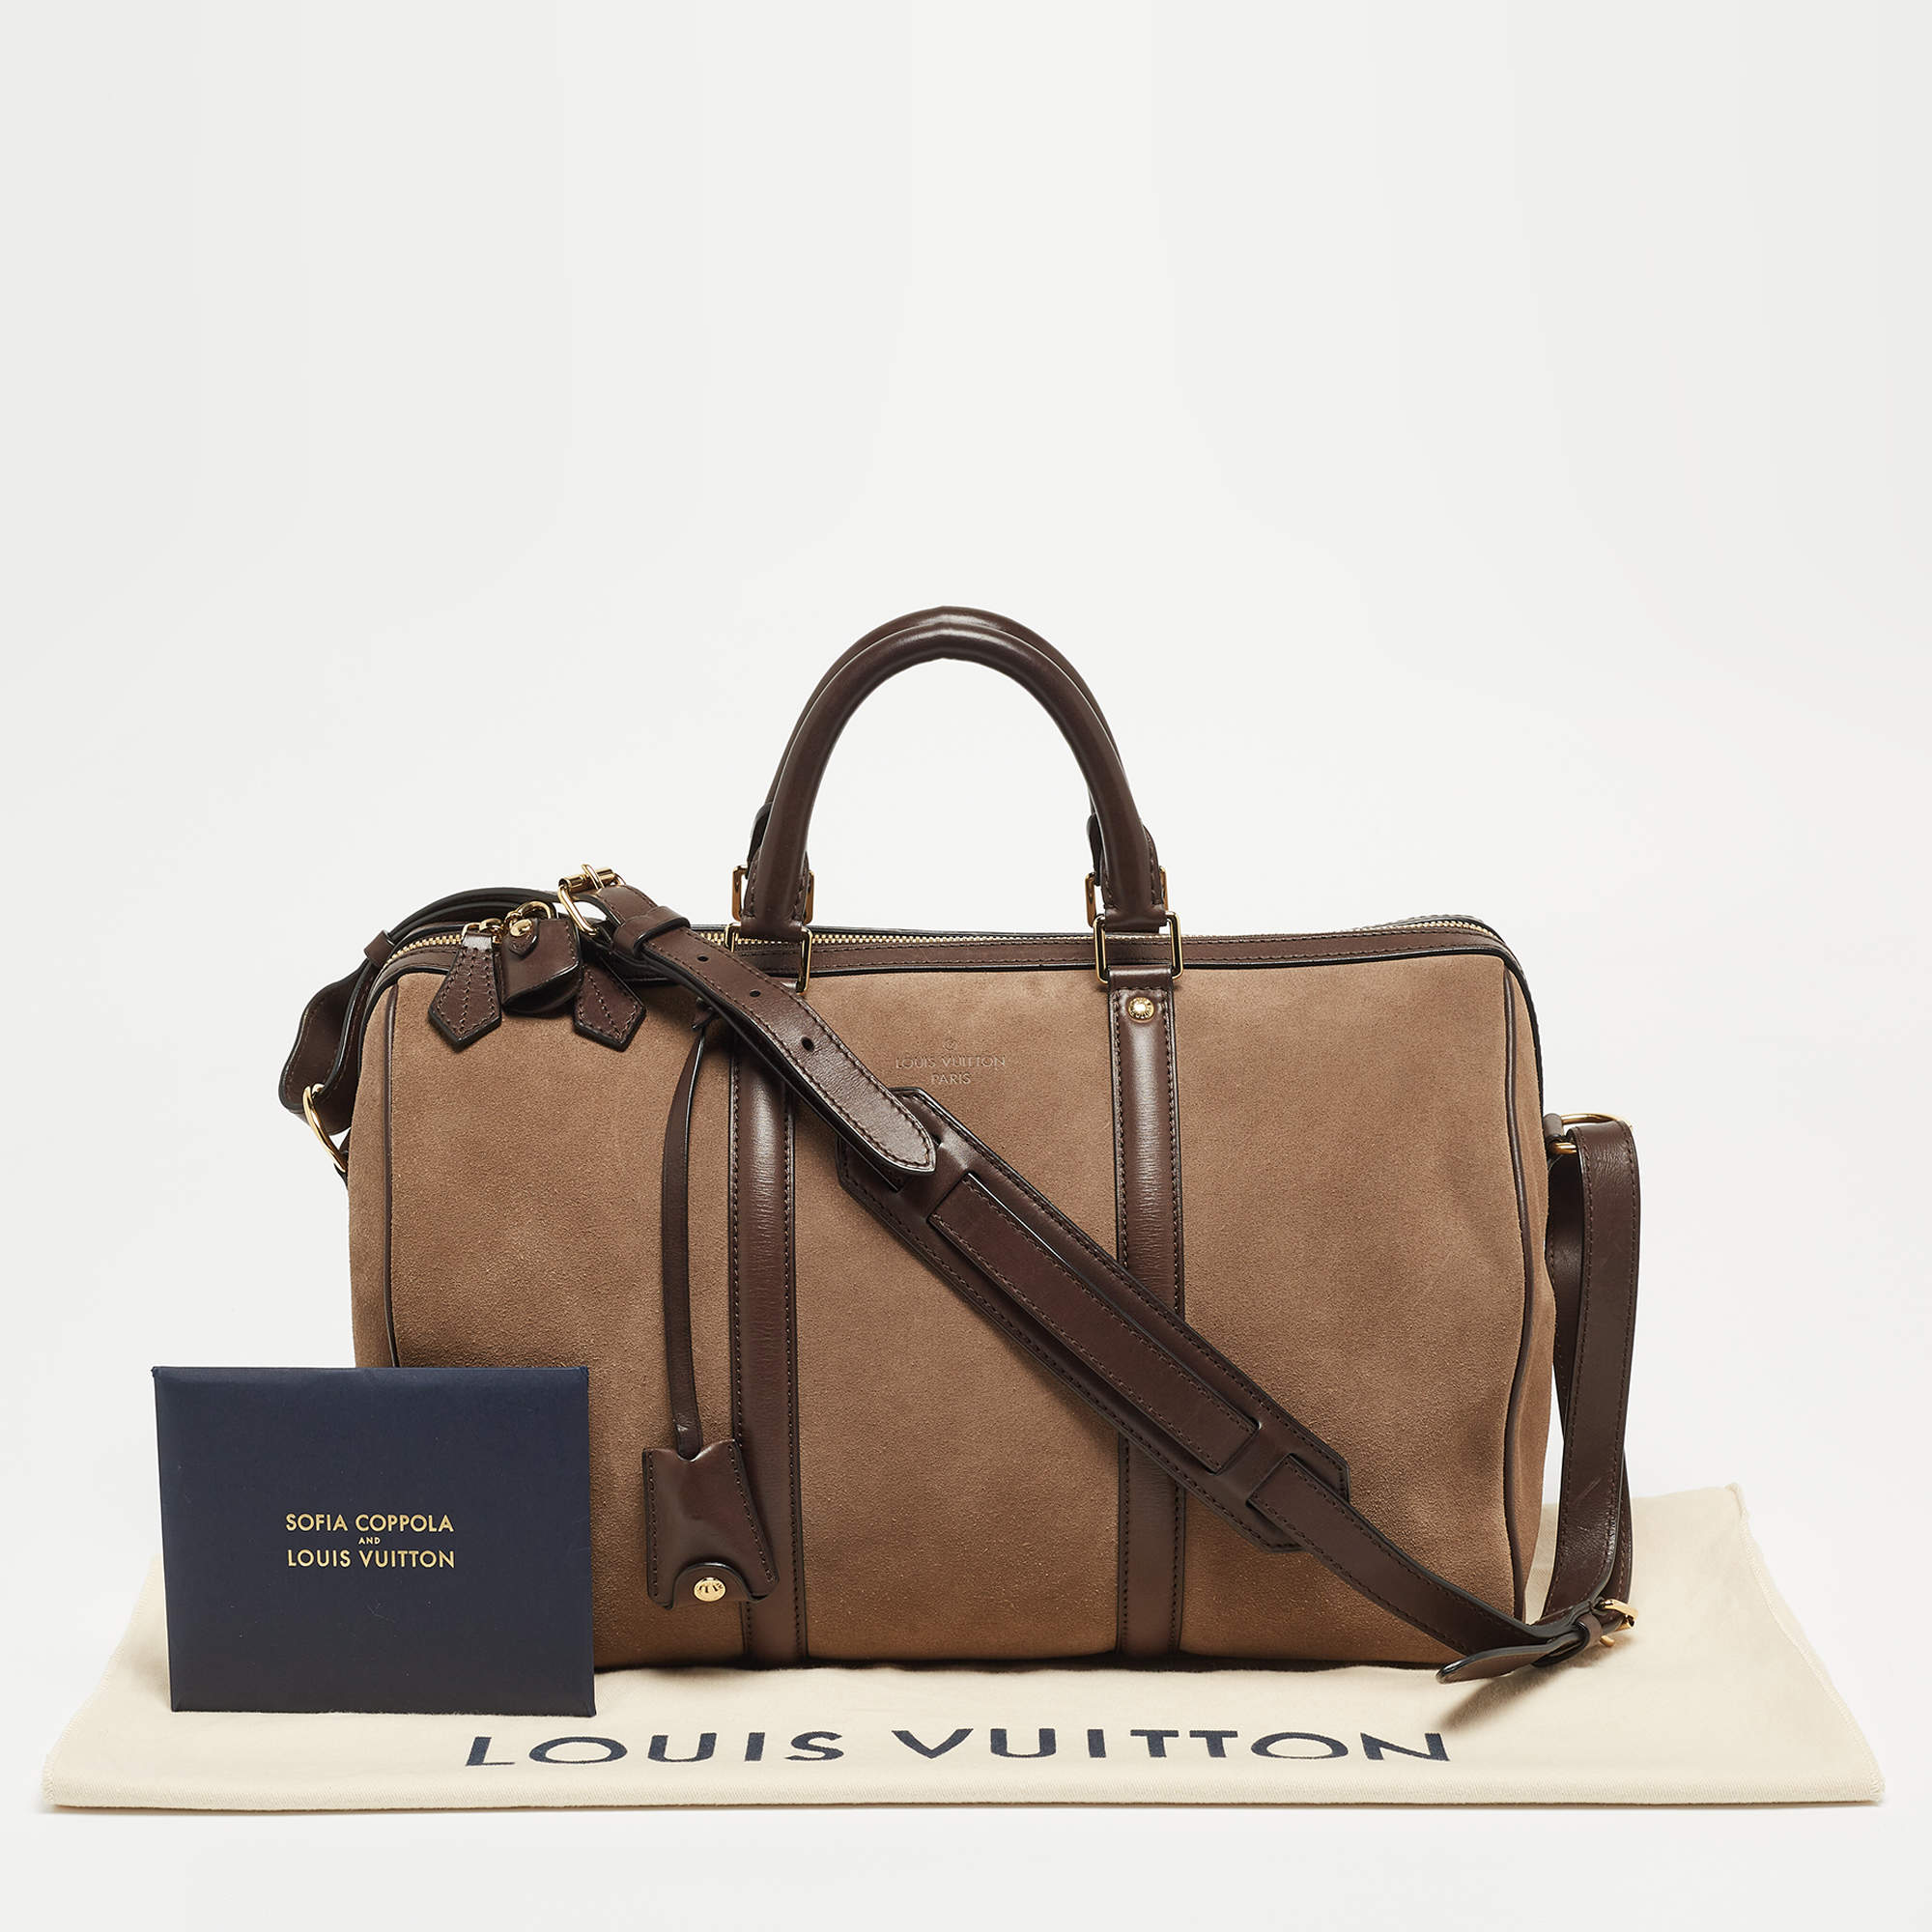 Louis Vuitton Speedy Sofia Coppola Handbag in Beige Leather